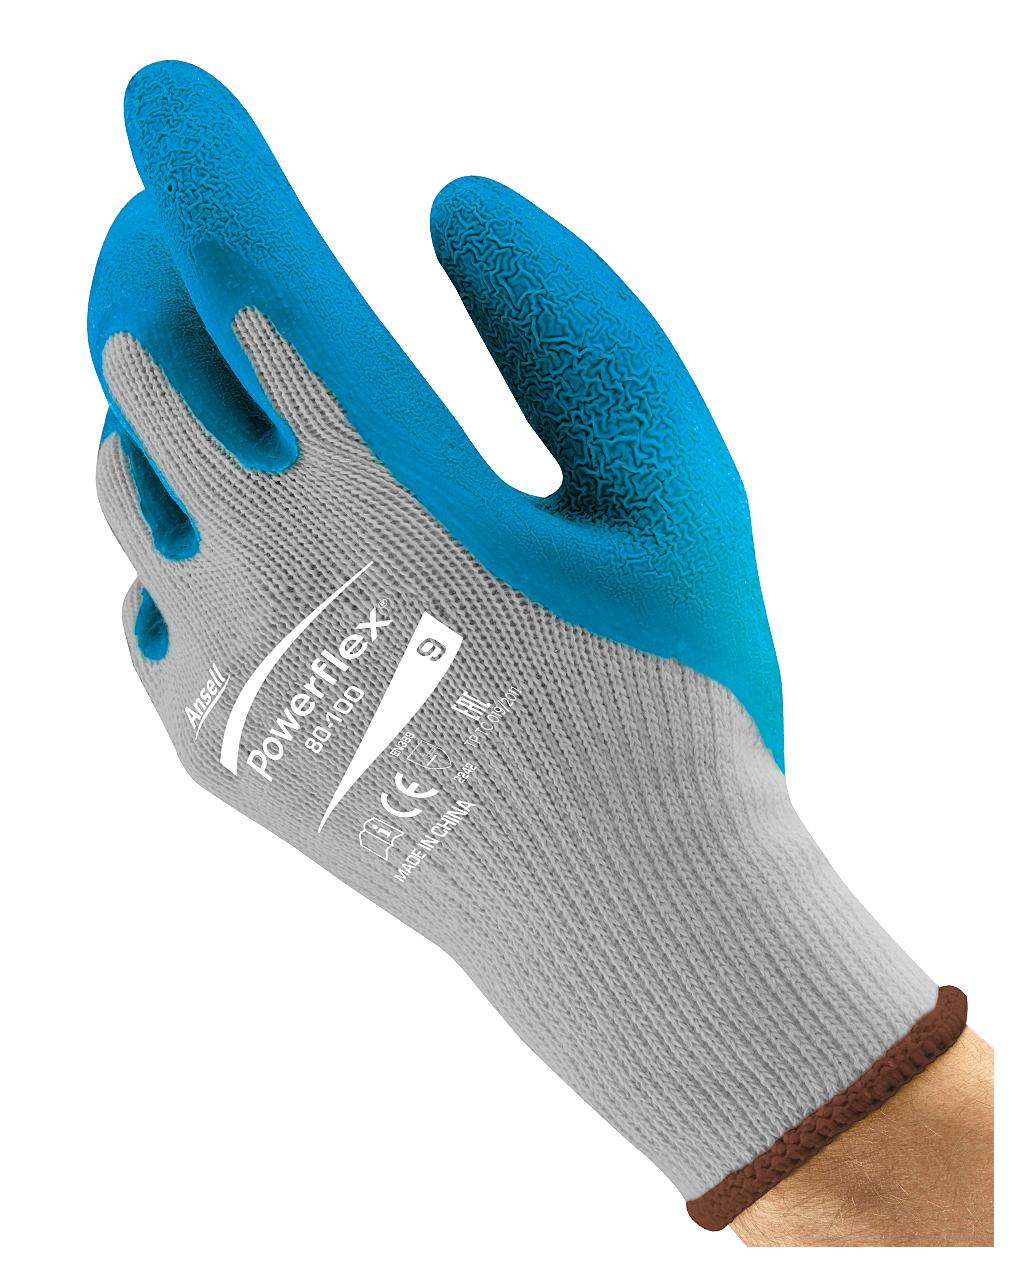 ActivArmr® Gloves 80-100